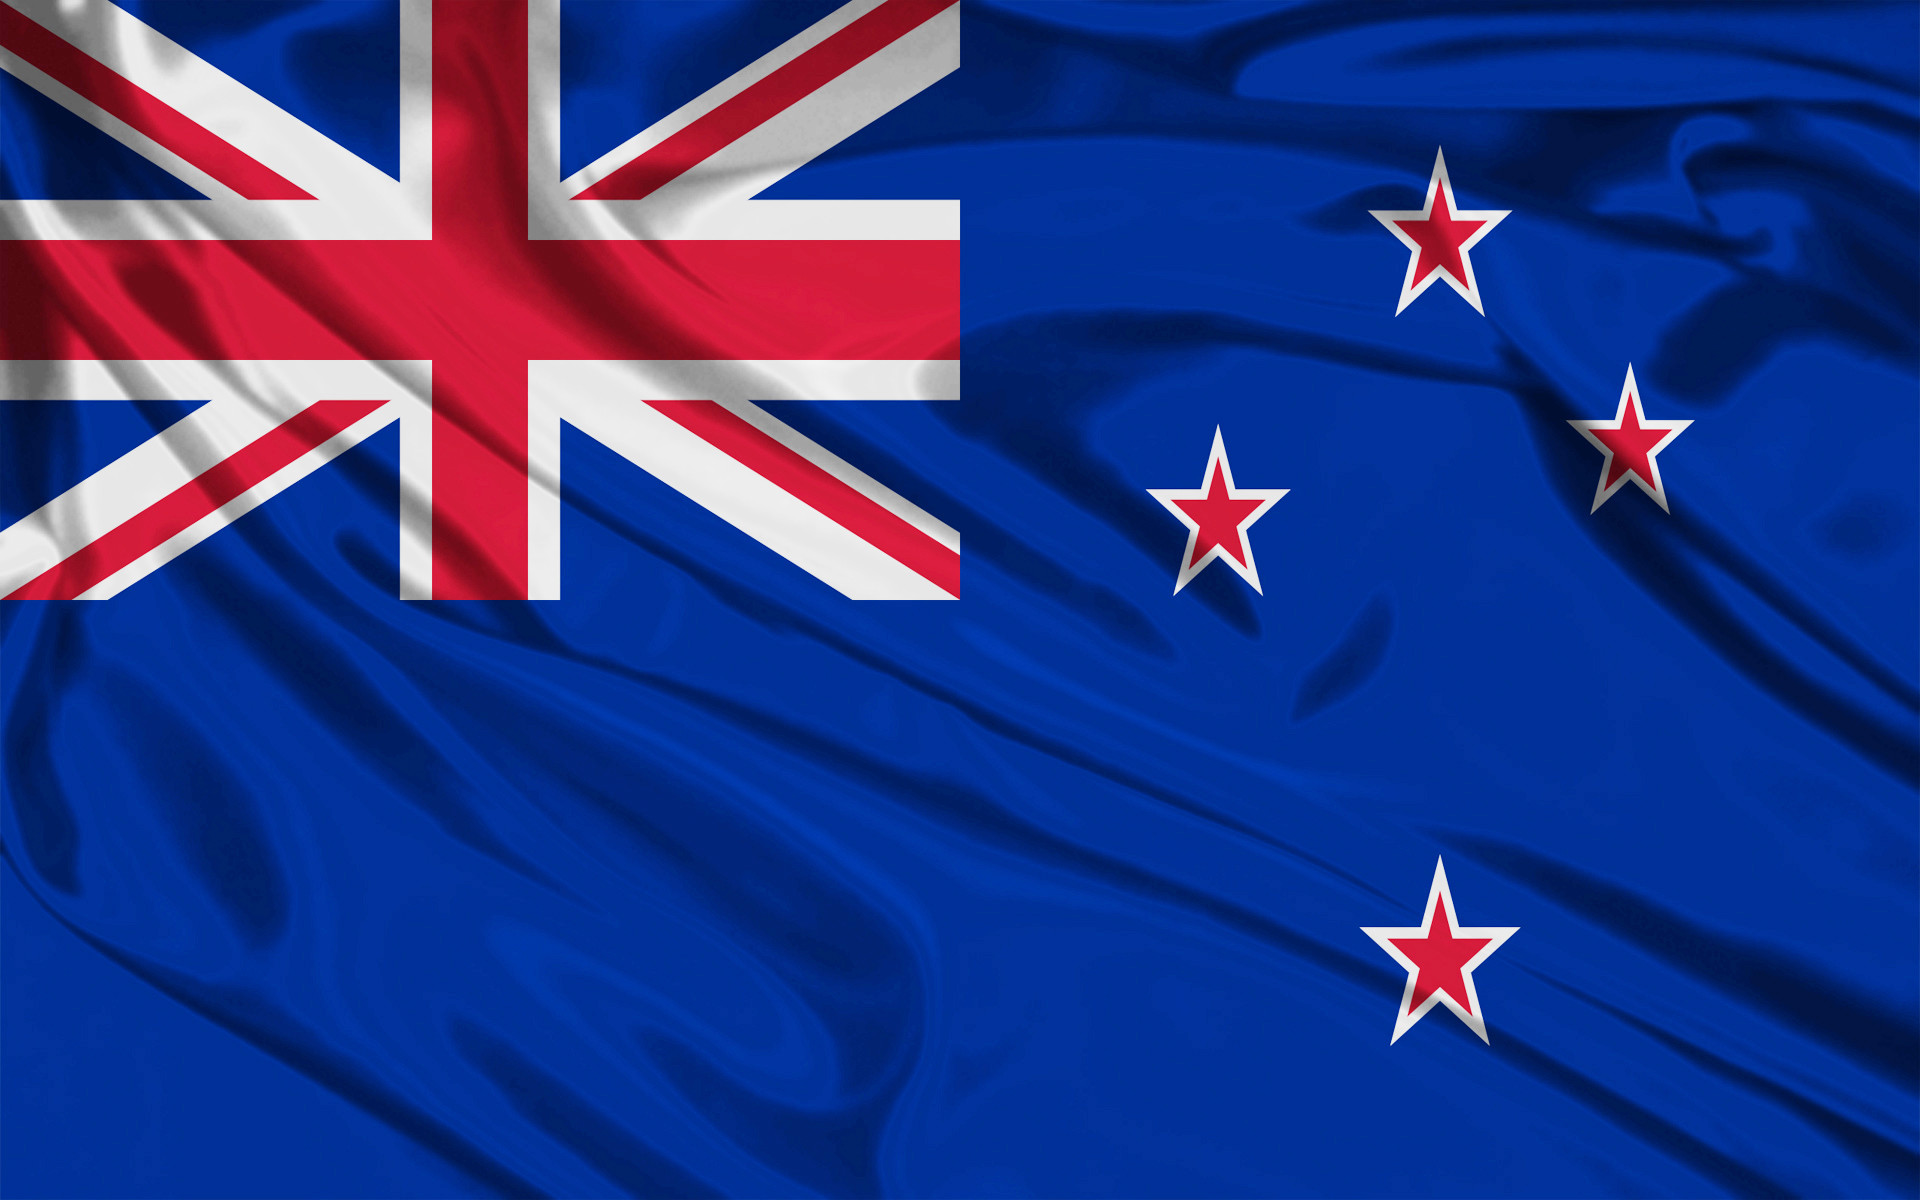 Previous New Zealand flag